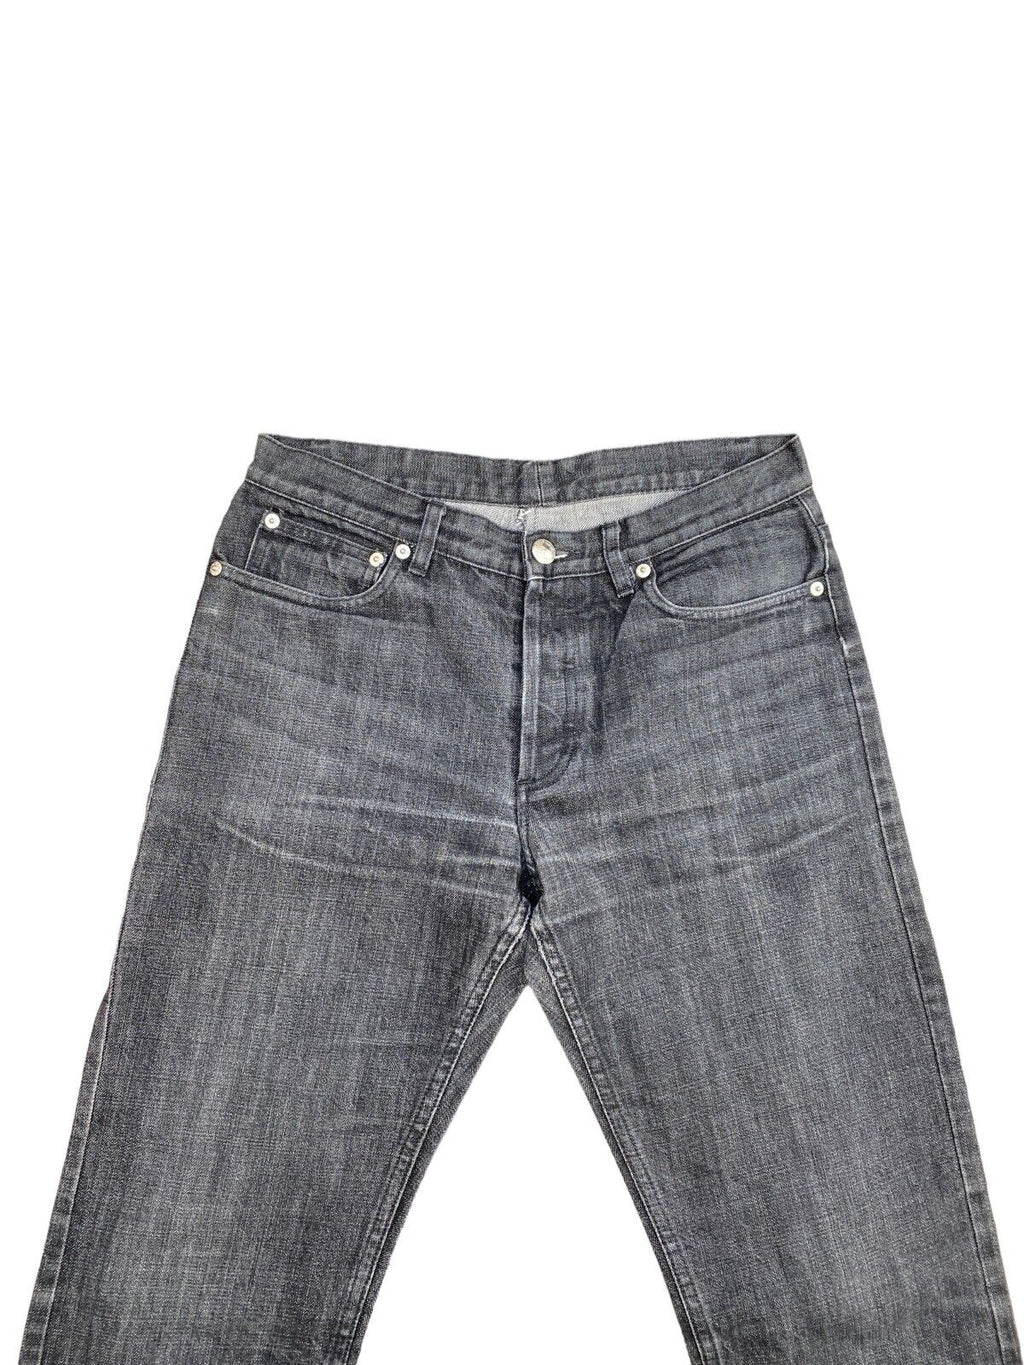 Petit Standard Grey / Black denim Jeans